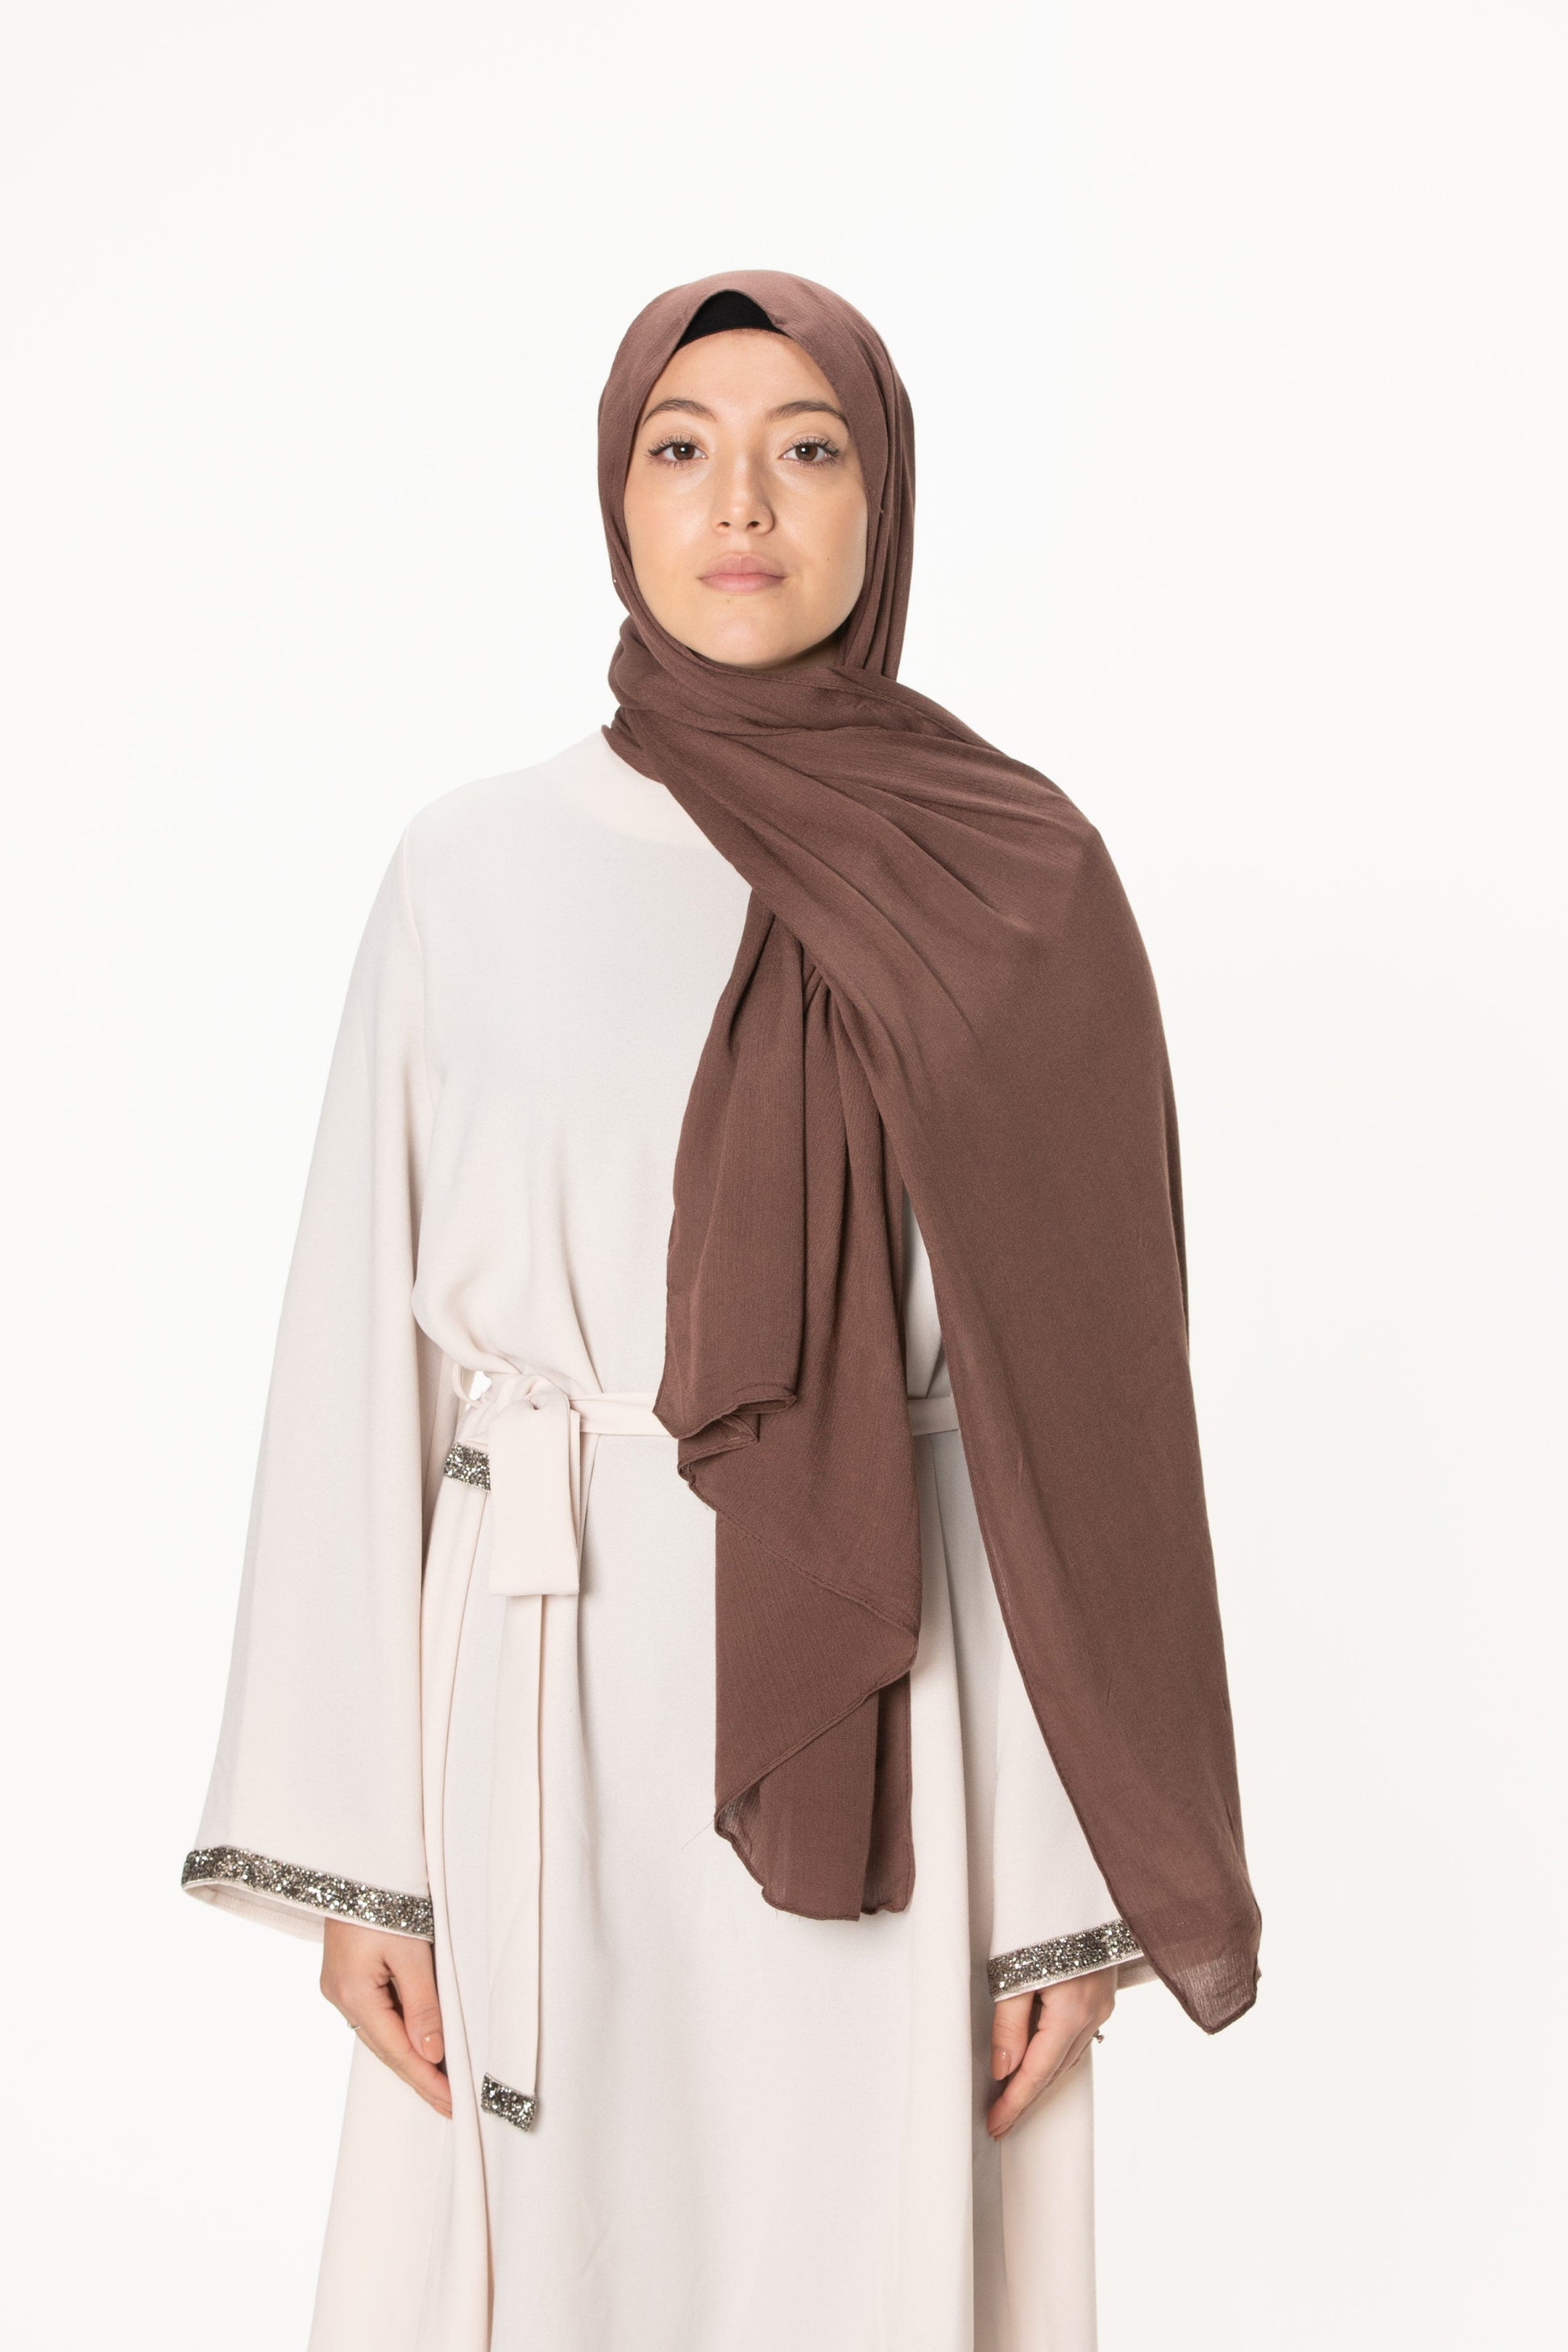 jolienisa Tapastry Brige Modal Crinkle Hijab